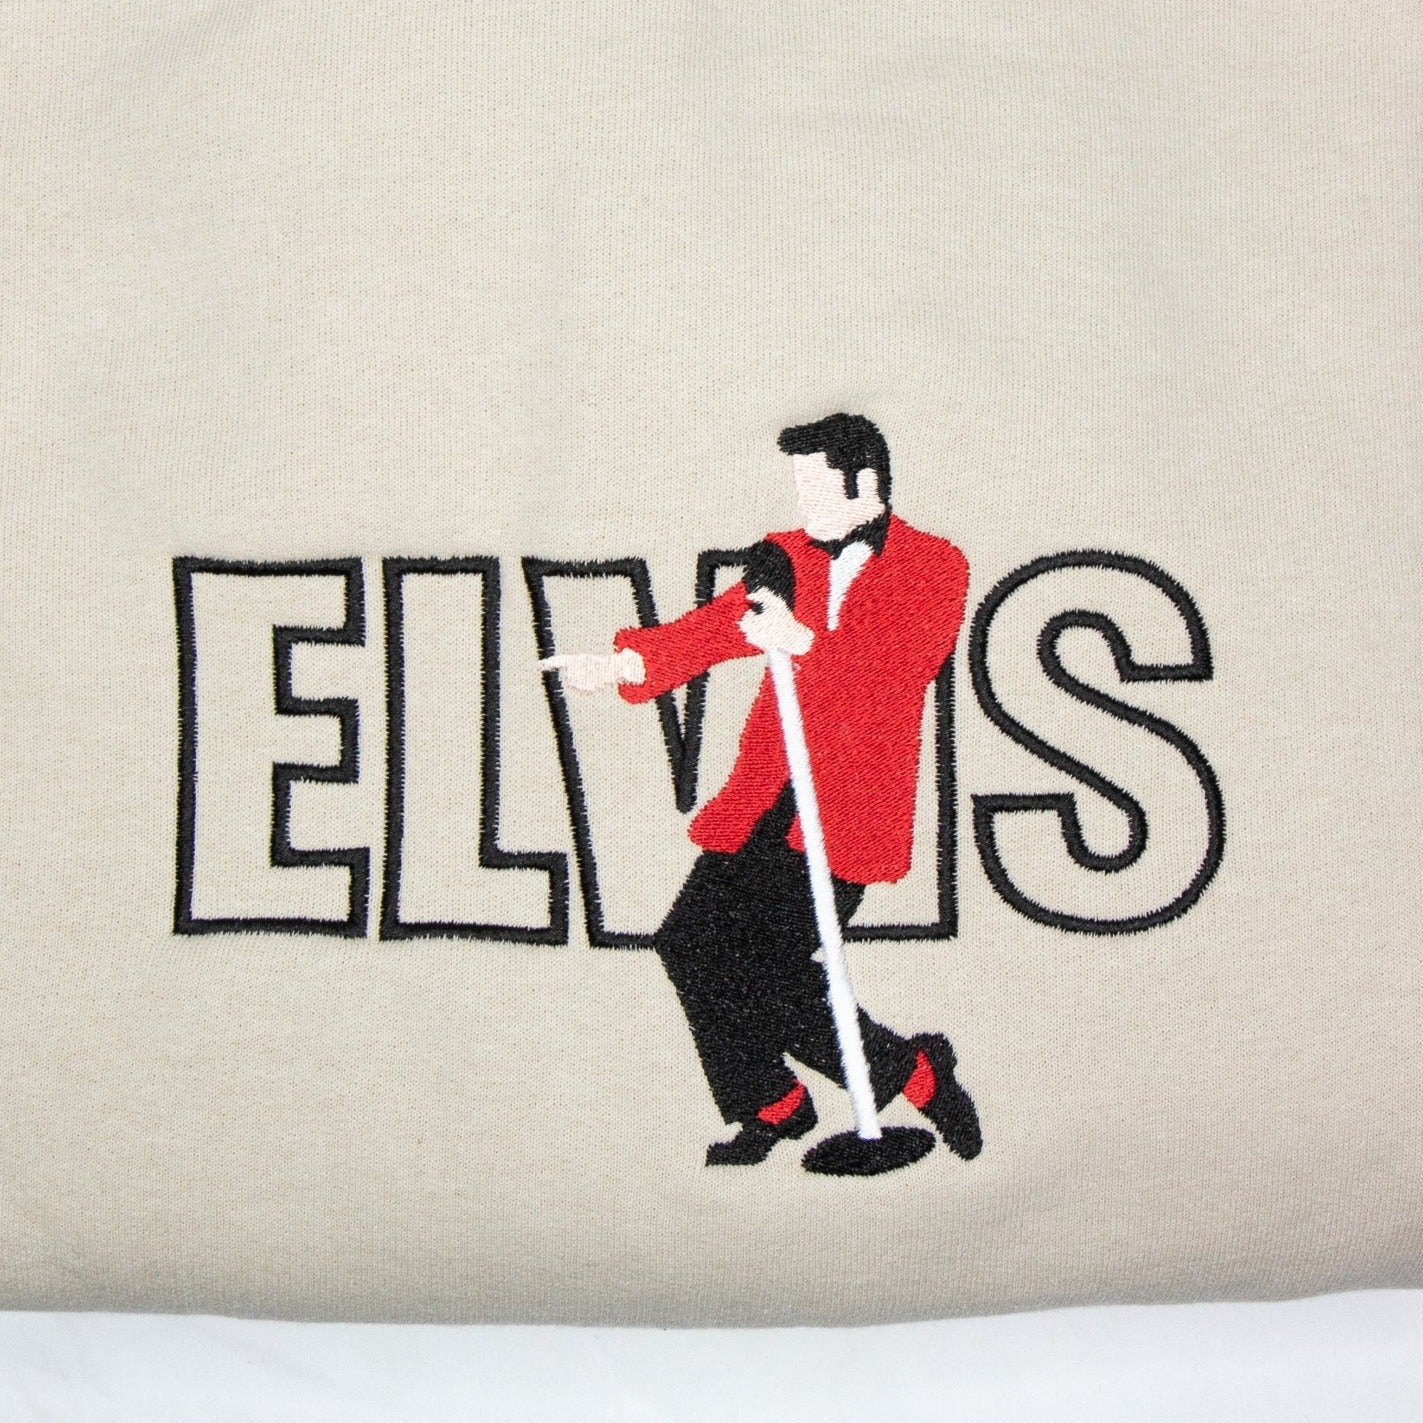 Elvis Presley in Red Suit Embroidered Crewneck